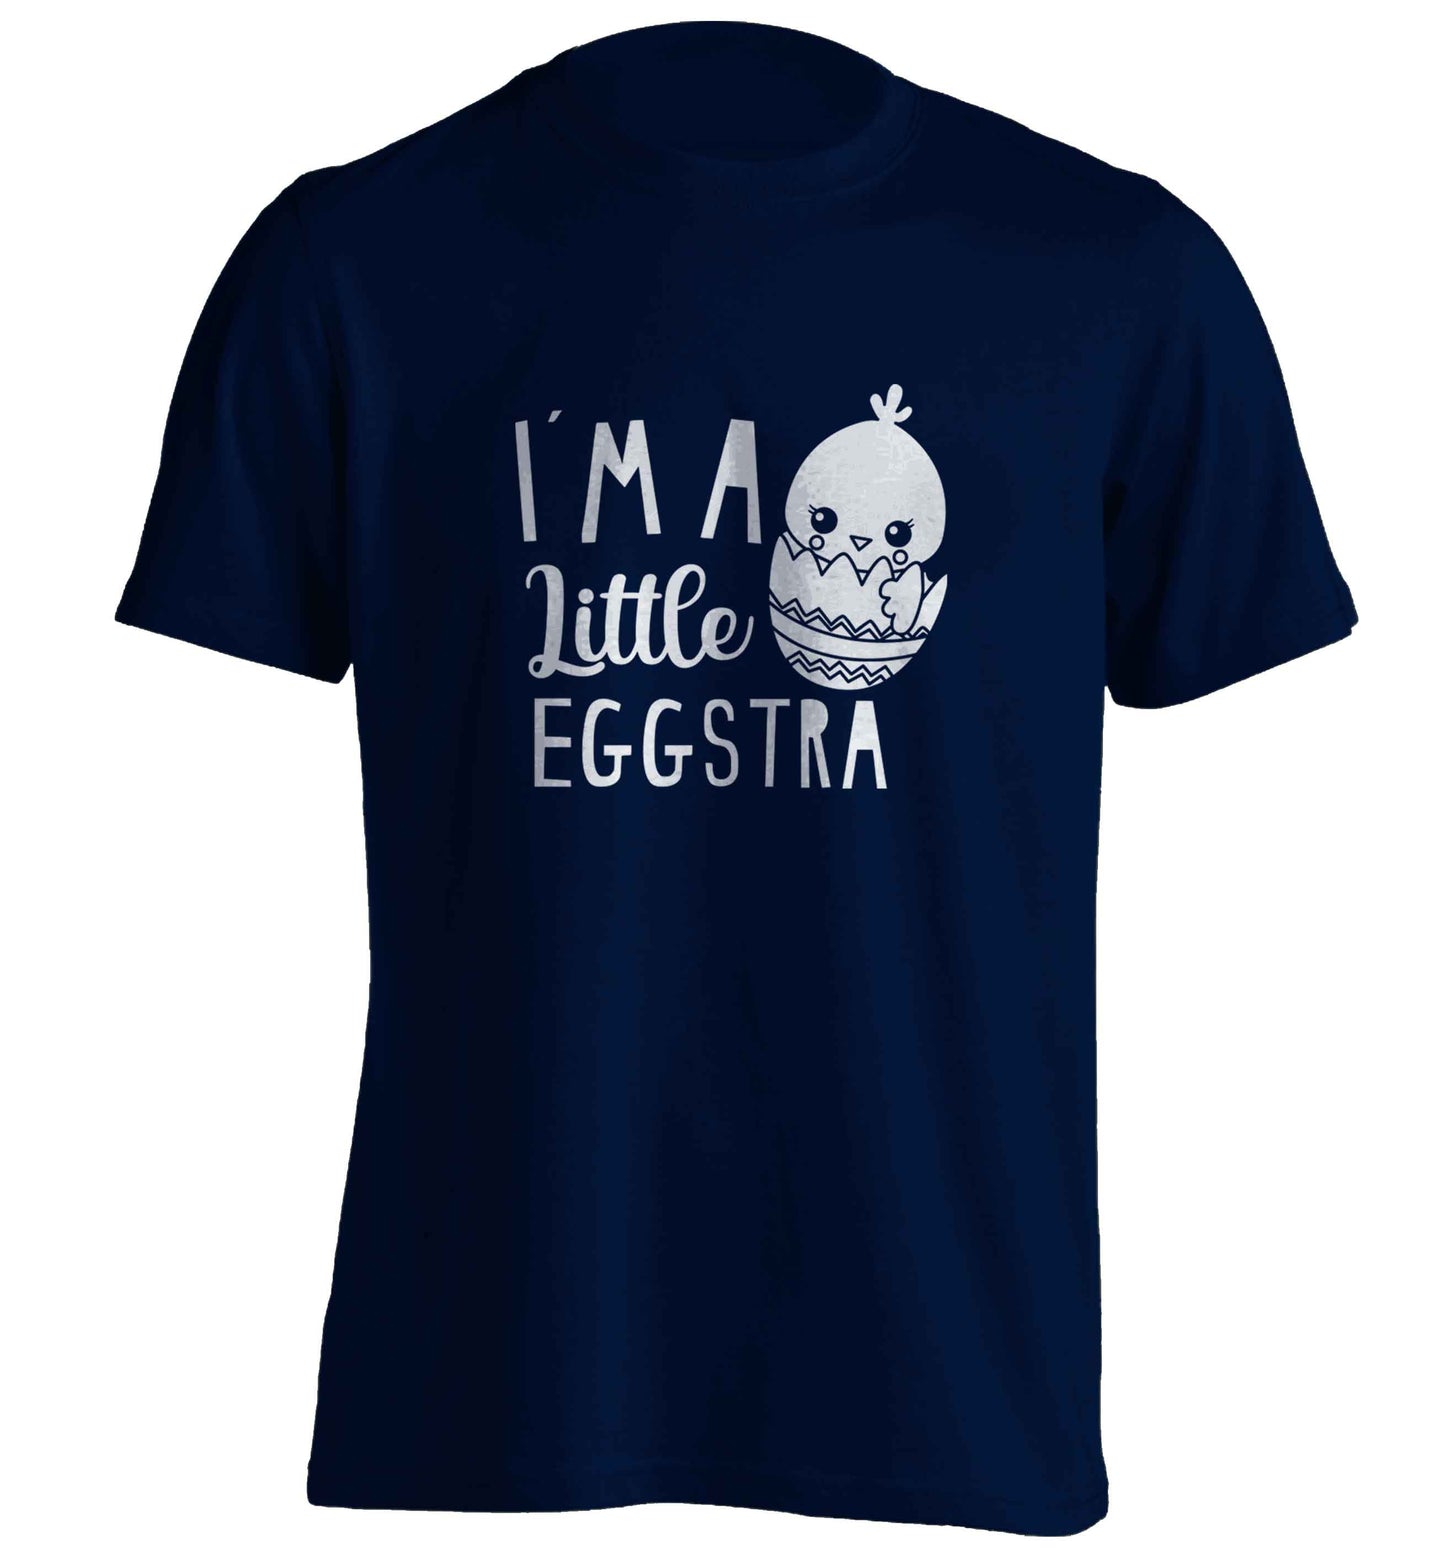 I'm a little eggstra adults unisex navy Tshirt 2XL